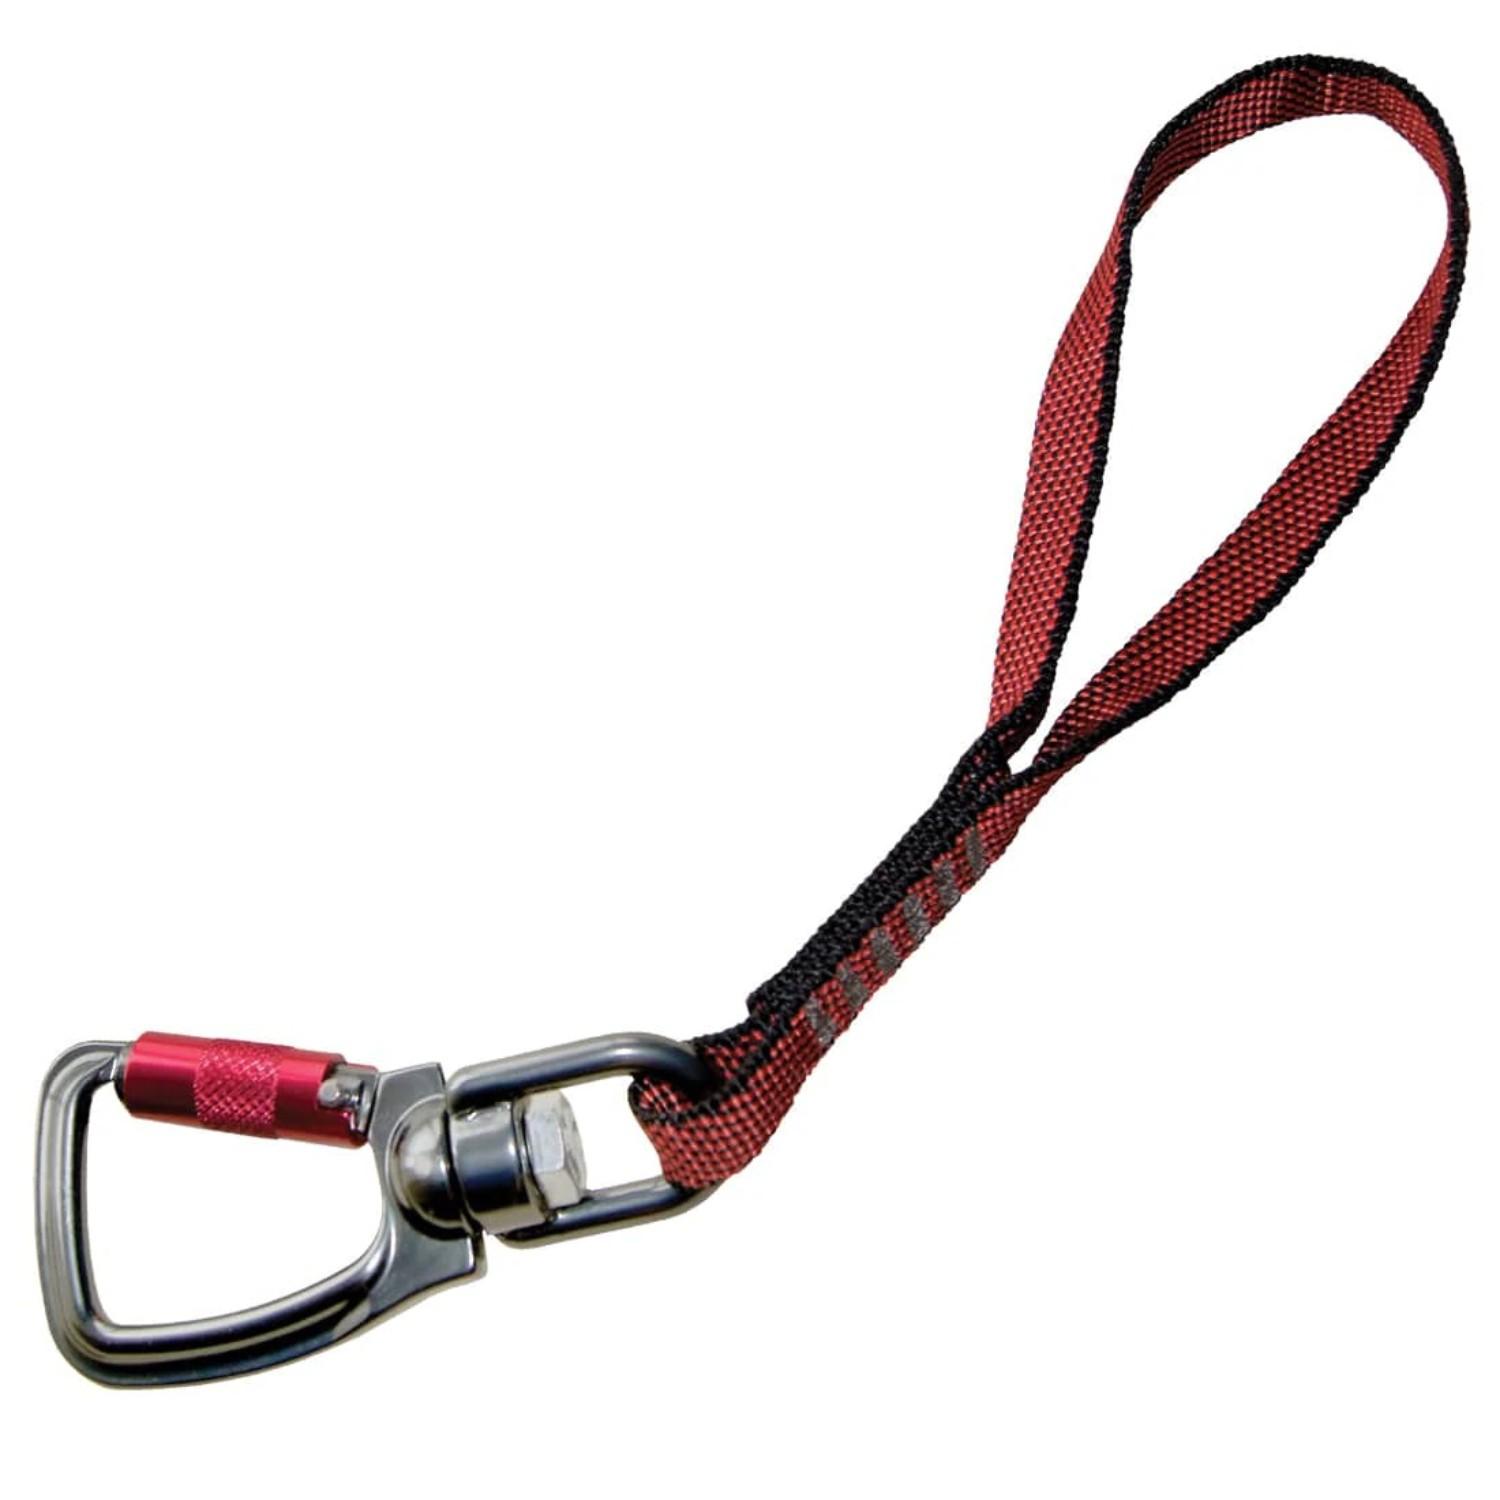 Kurgo Seatbelt Loop Swivel Tether - Red